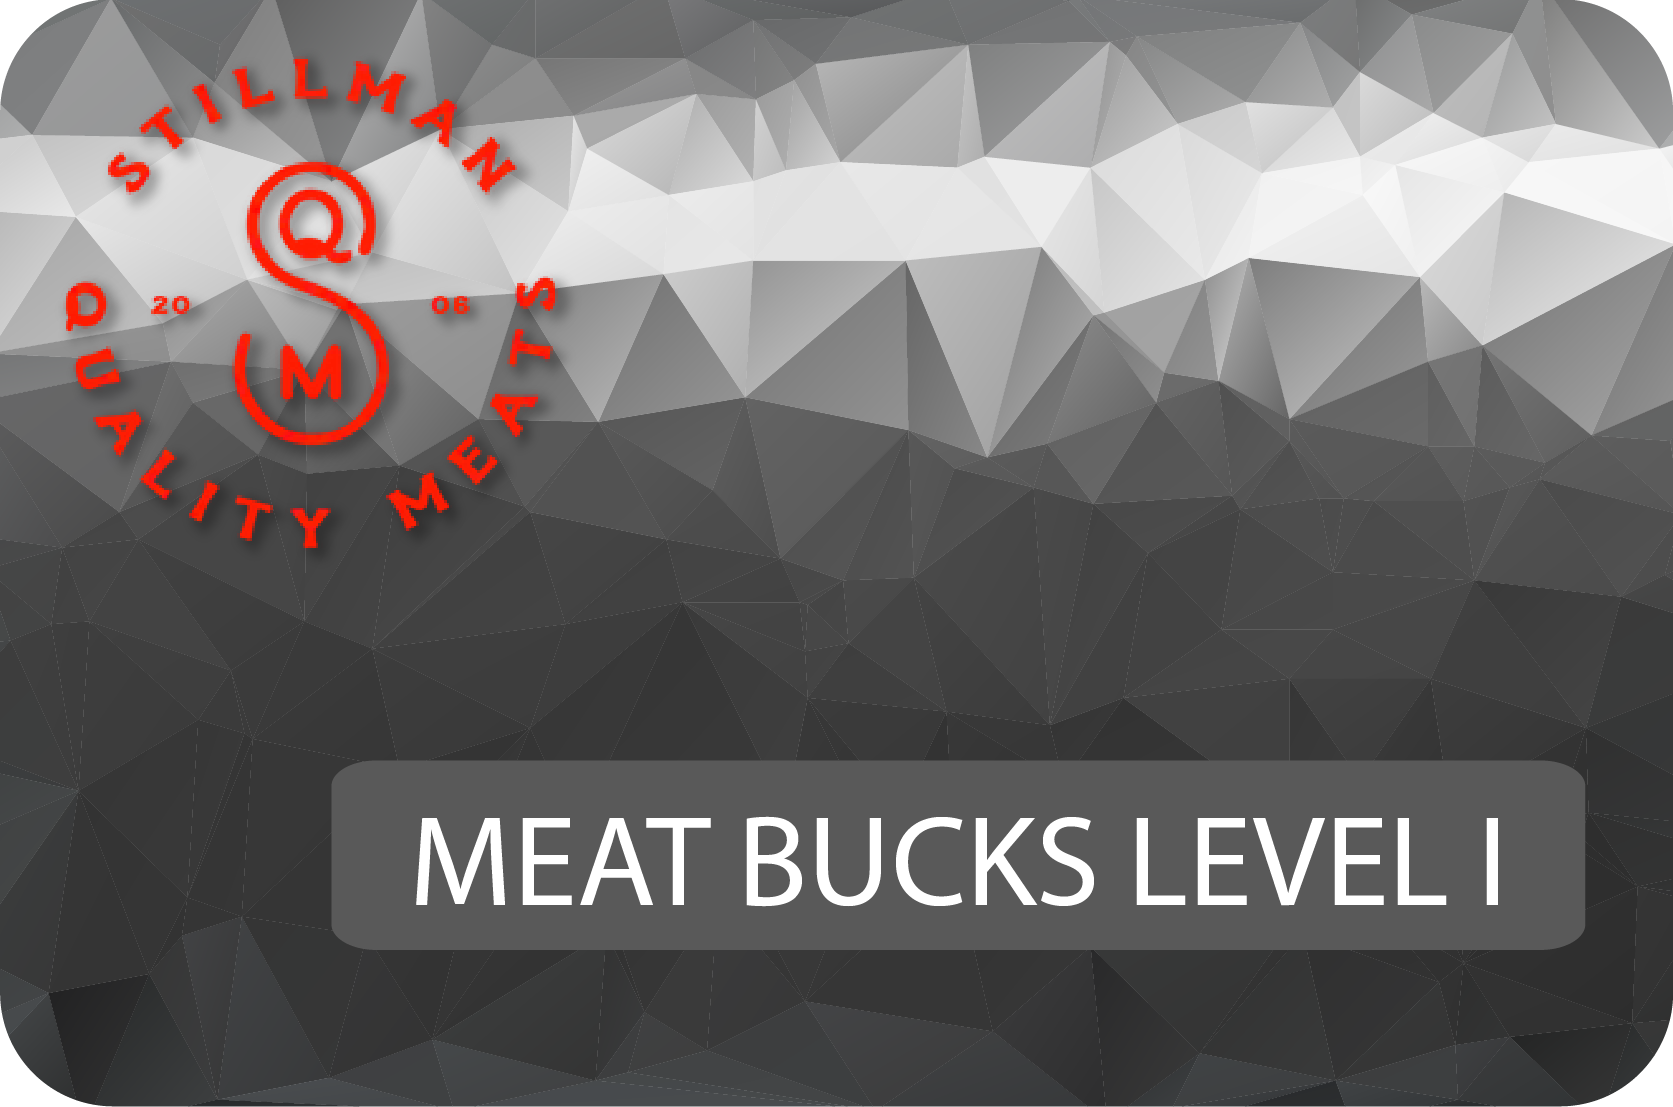 Meat Bucks Level I: $300 → Get $330 (10% savings!)